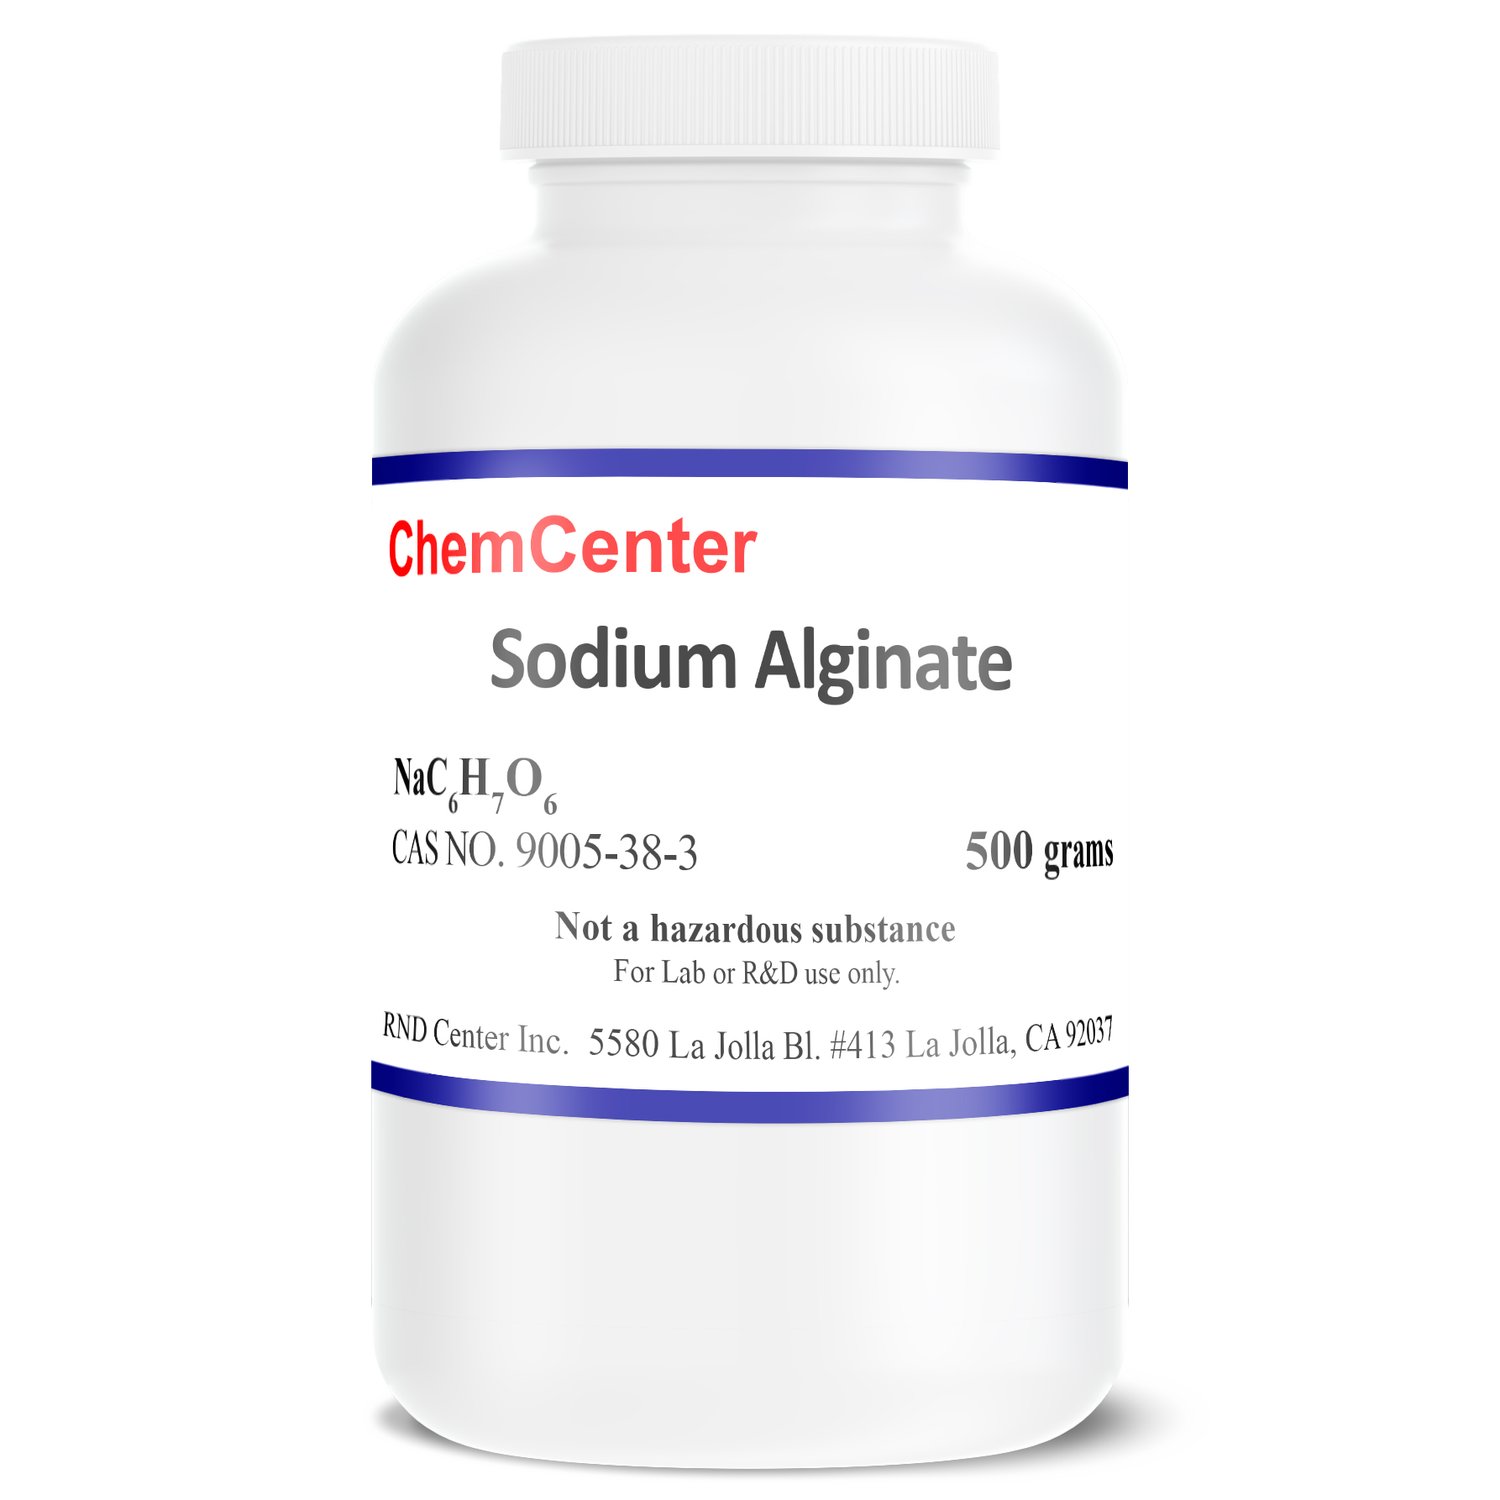 Yantai Mingdian - Sodium alginate powder is an ideal paste